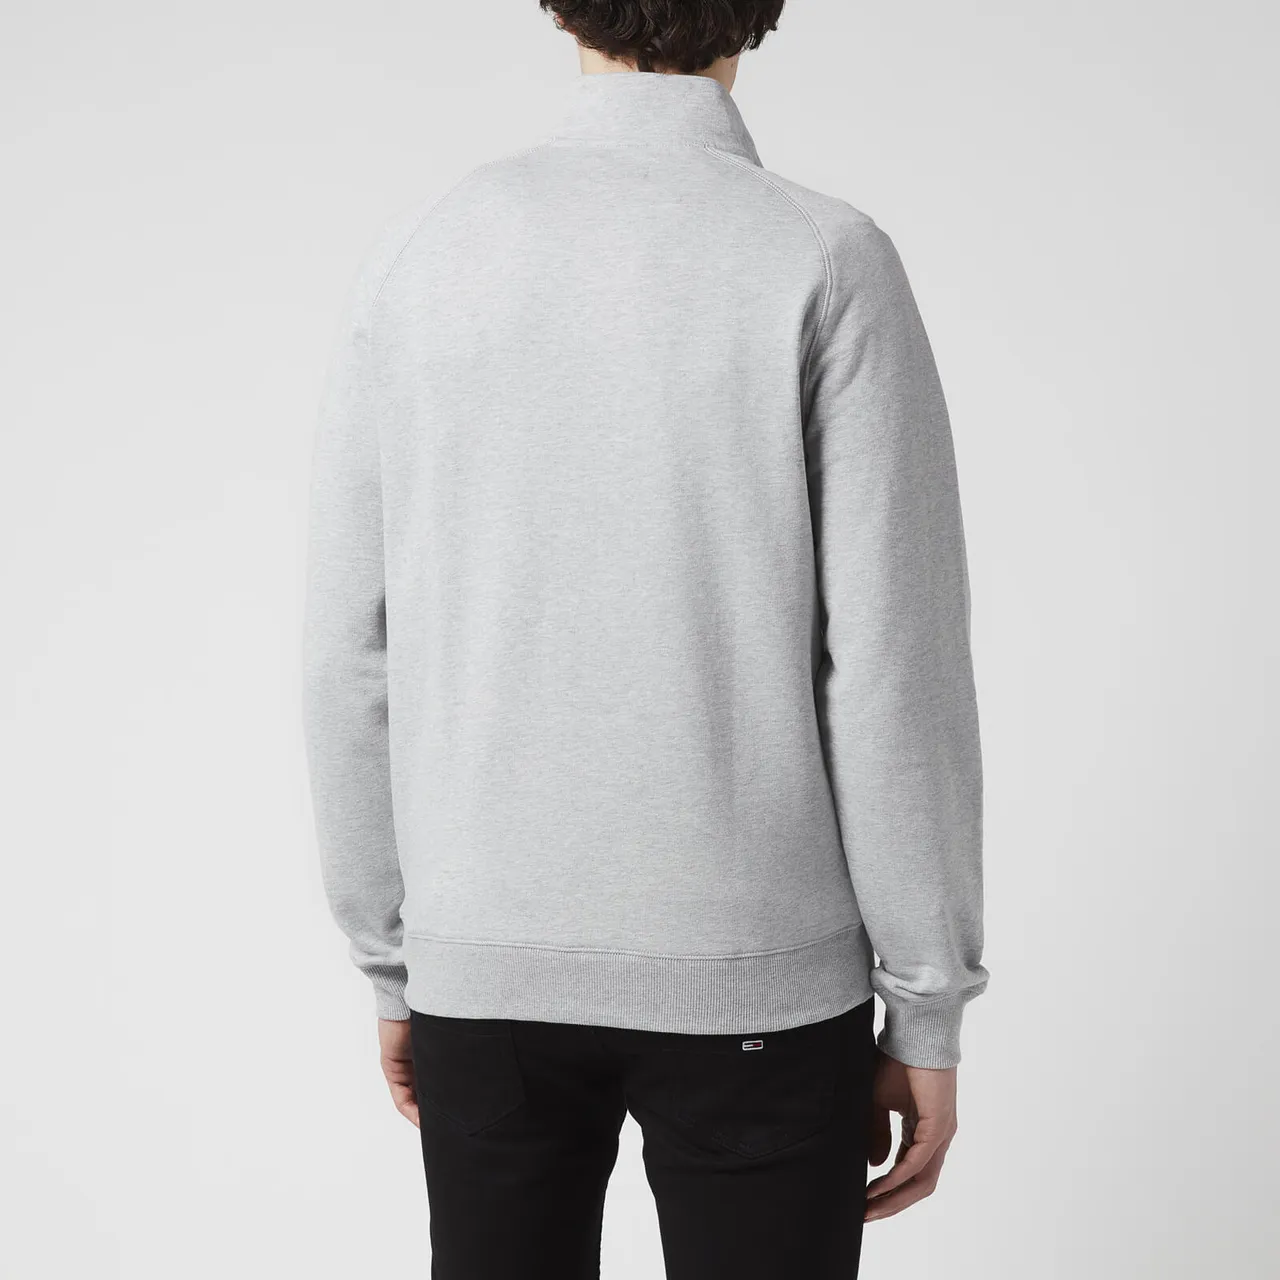 Farah Men's Jim Quarter Zip Sweatshirt - Light Grey Marl